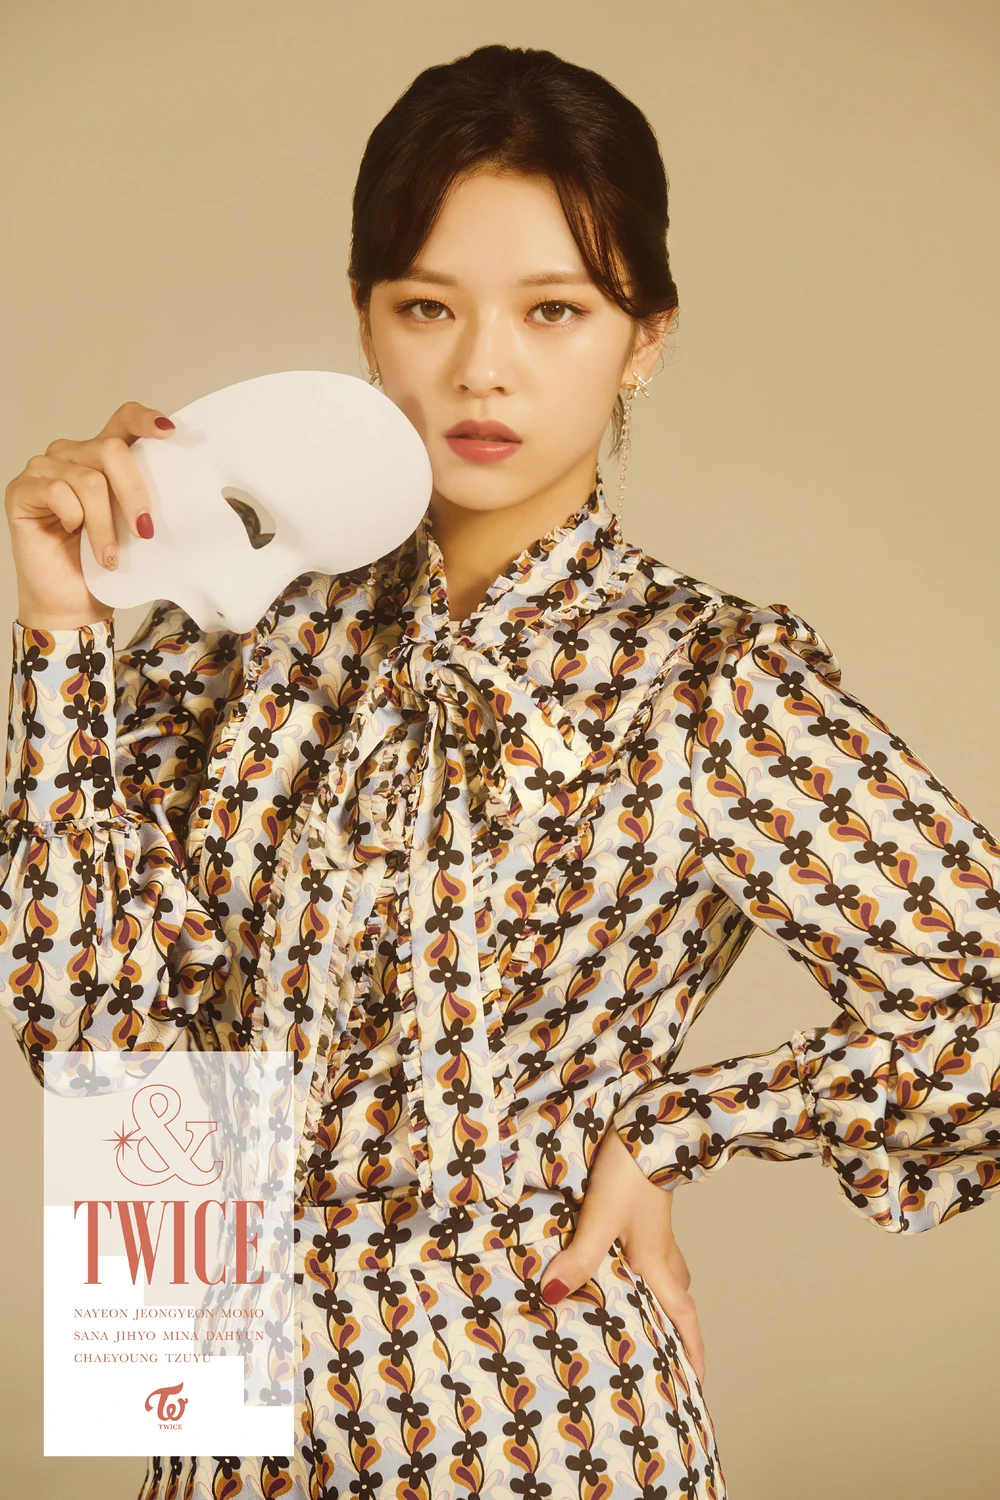 Twice &Twice Jeongyeon Concept Photo 1